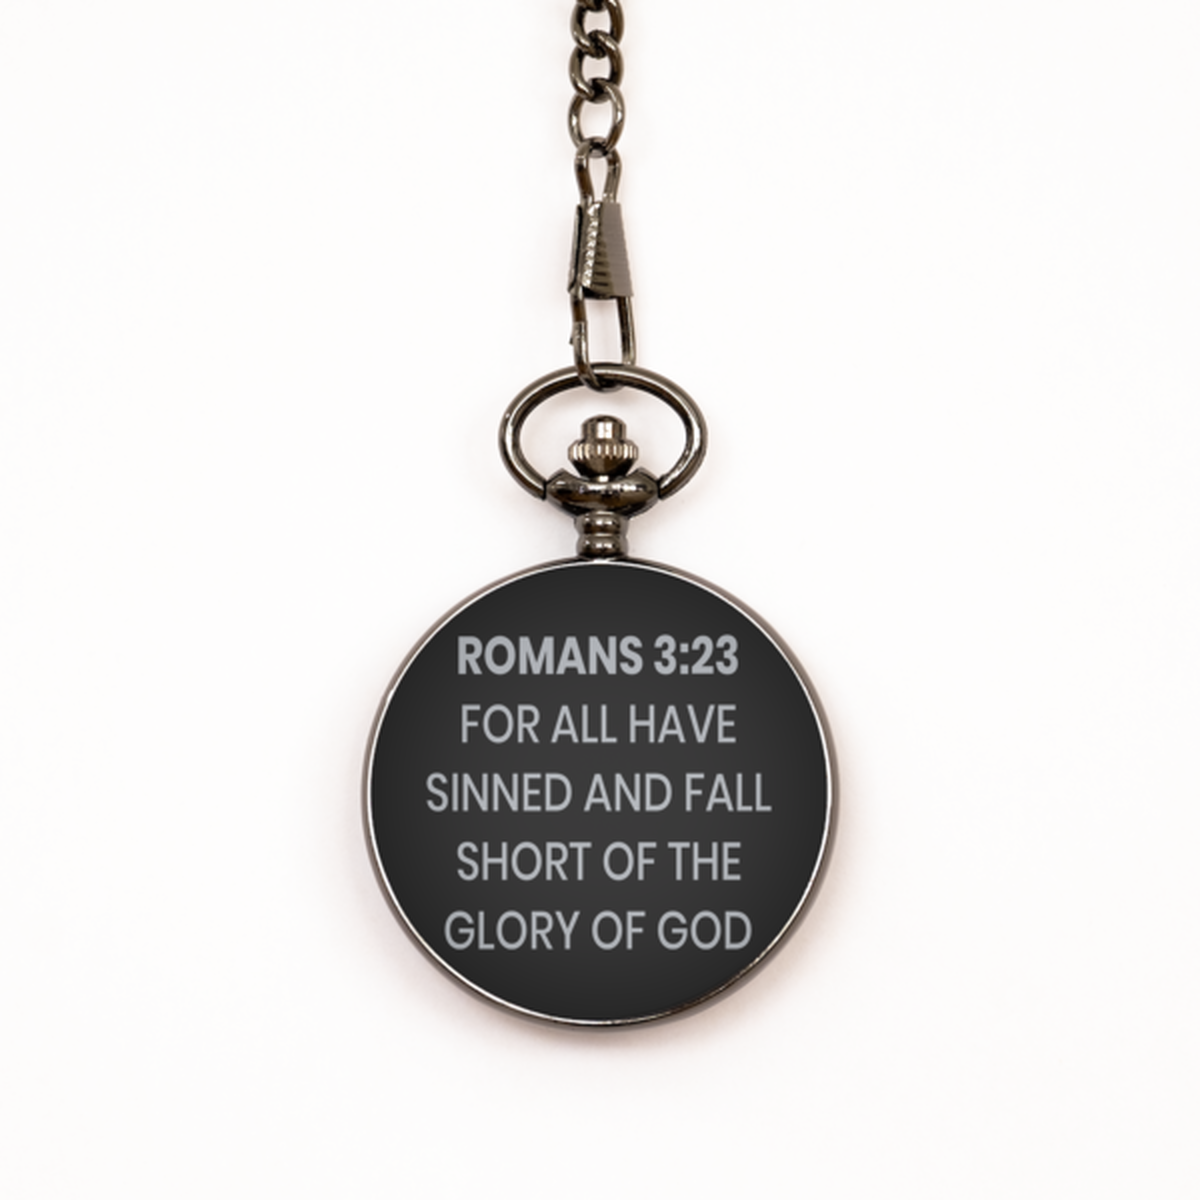 Romans 3:23 Pocket Watch, Bible Verse Pocket Watch, Christian Pocket Watch, Christian Birthday Gift, Engraved Pocket Watch, Gift for Christian.